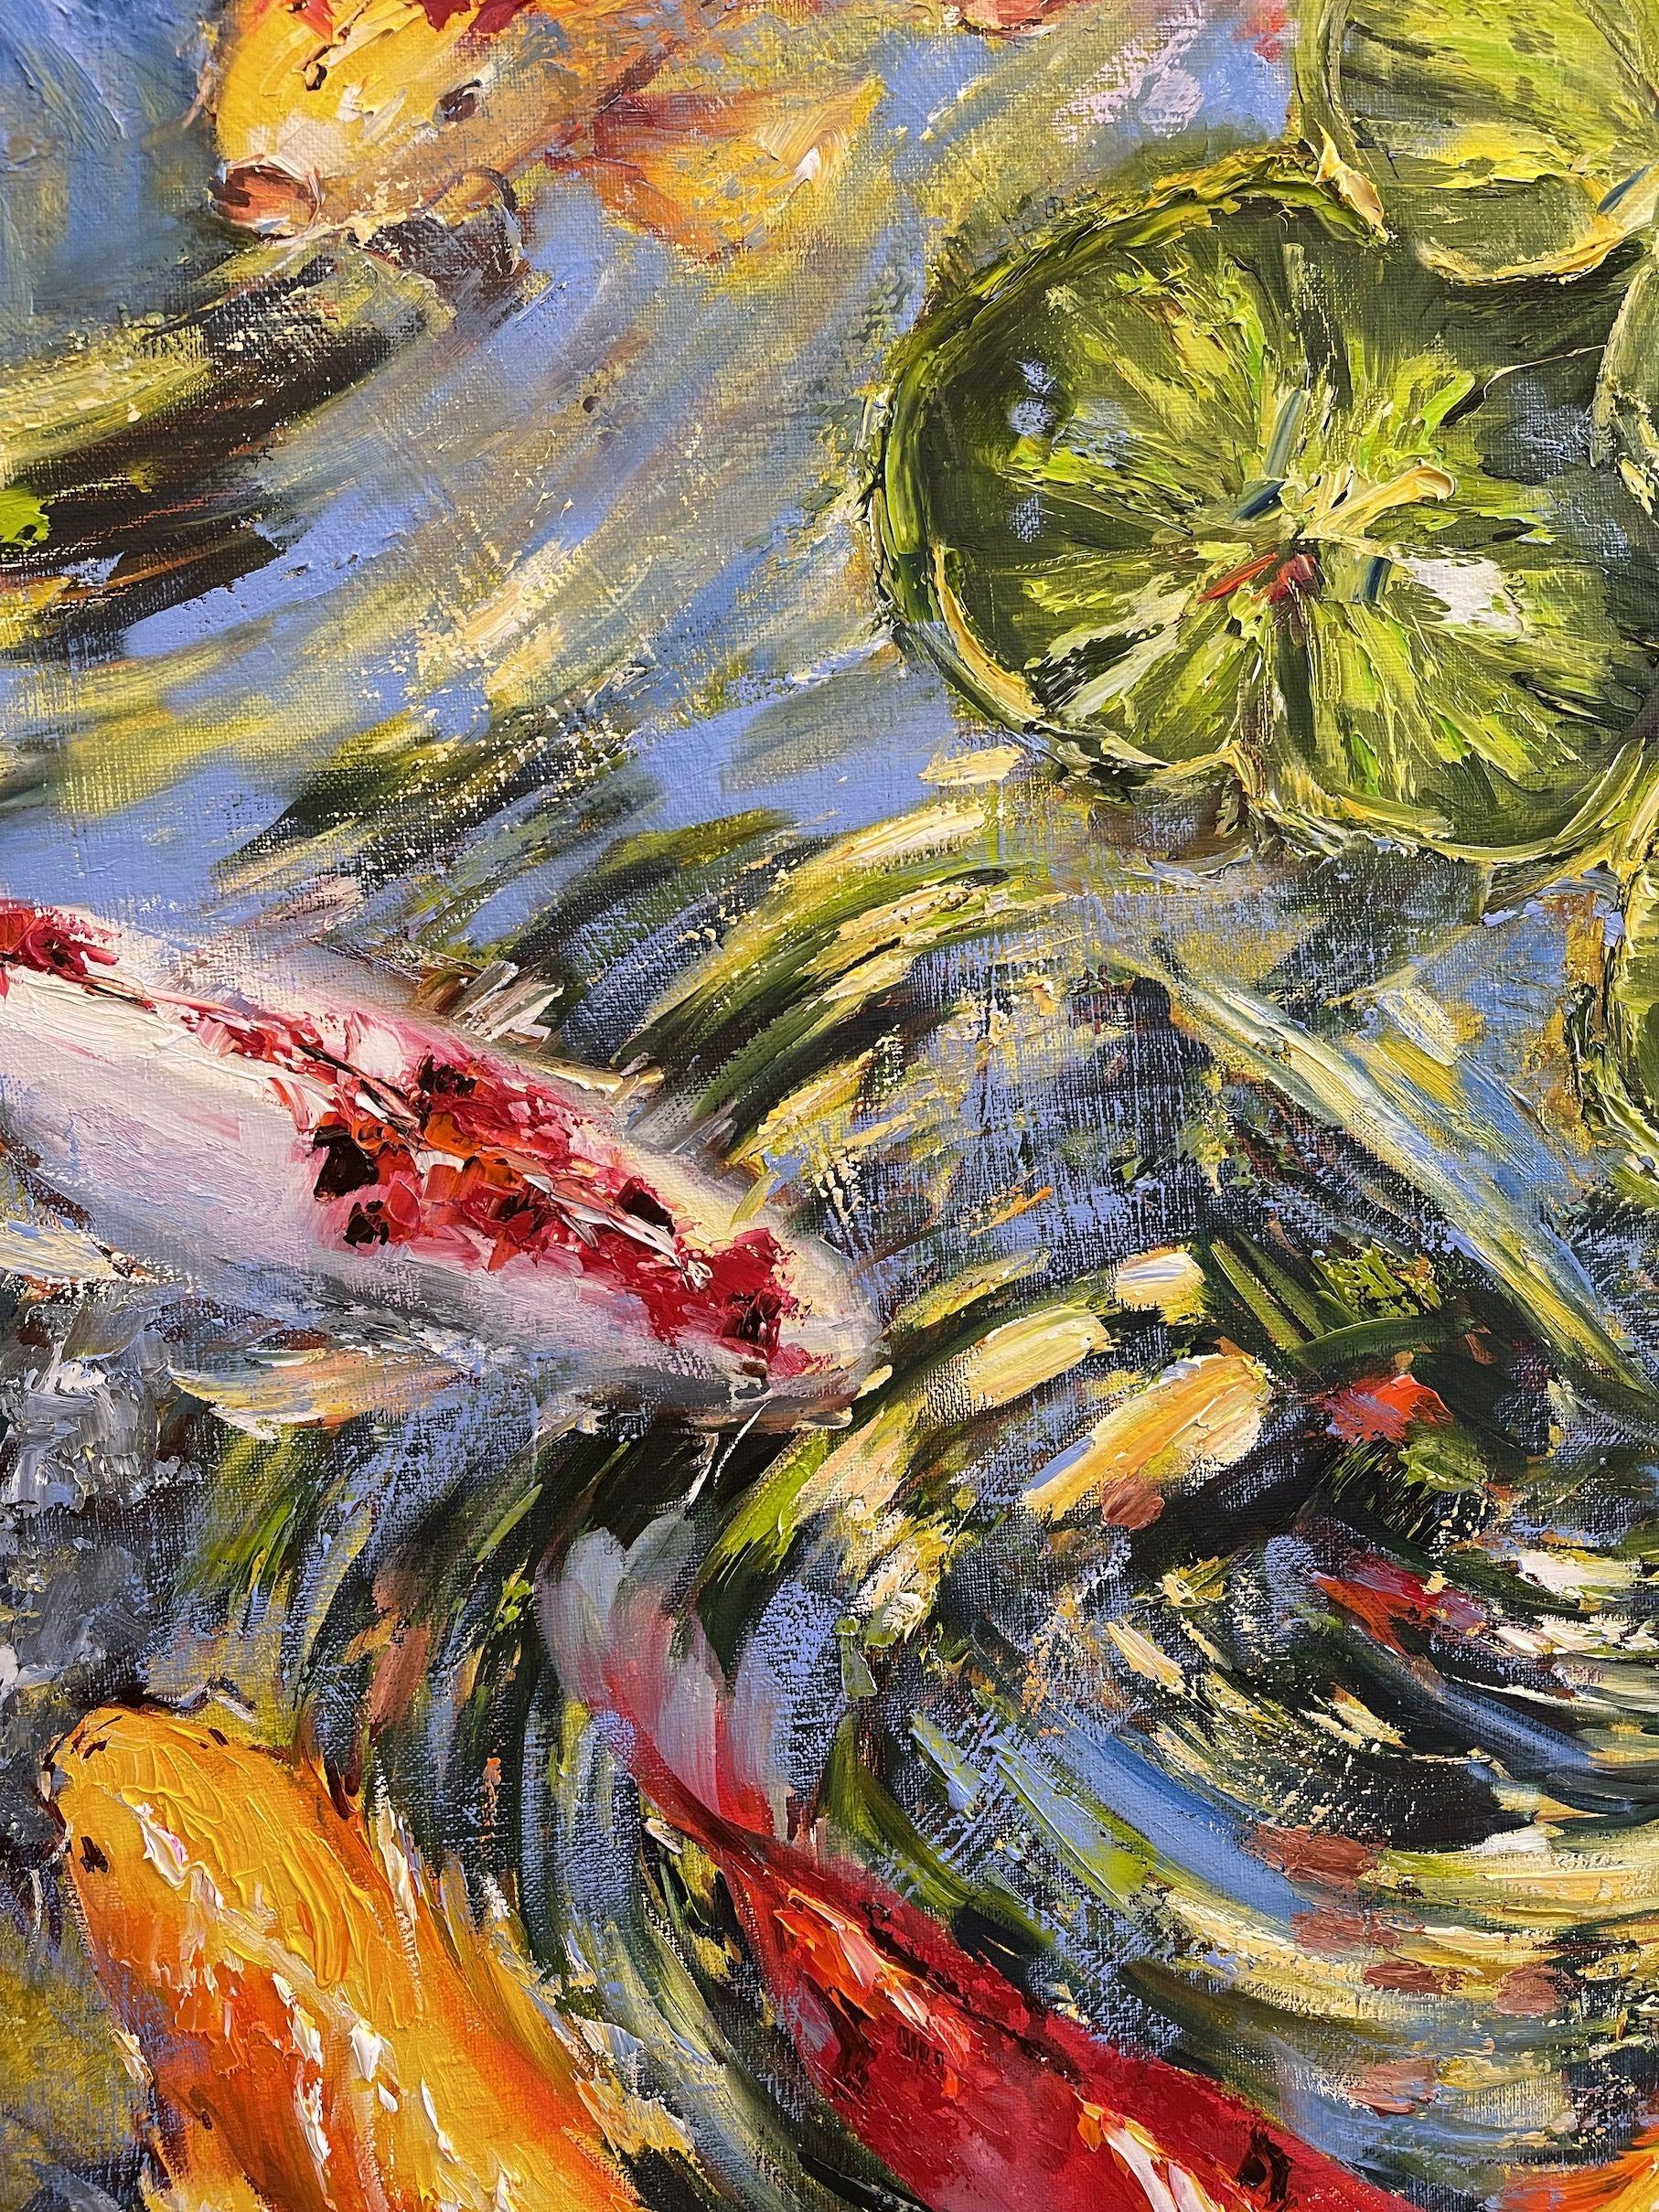 Koi Fish, Painting, Oil on Canvas 2